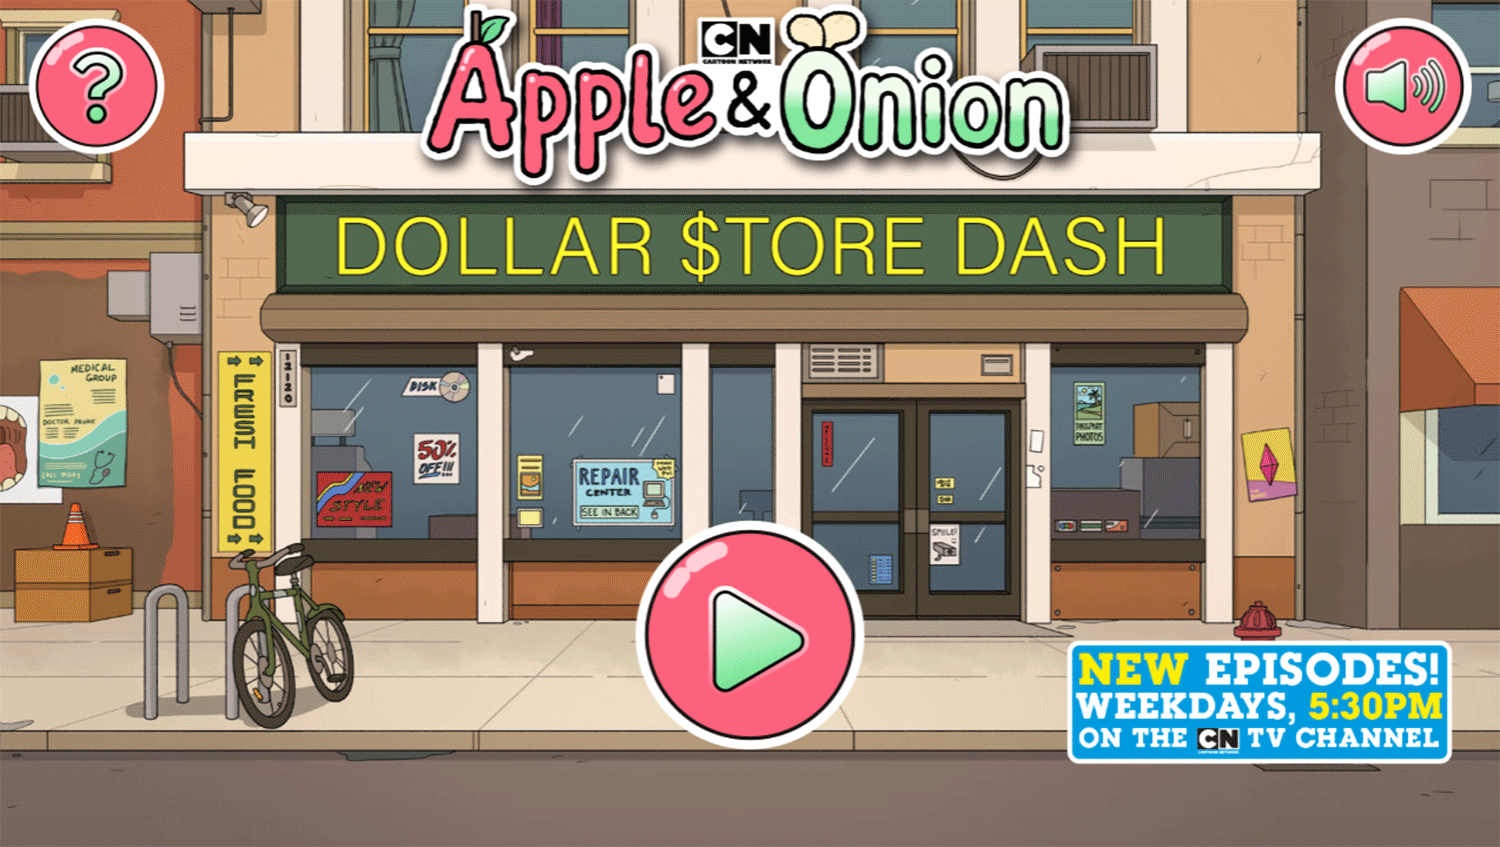 Apple & Onion Dollar Store Dash Game Welcome Screen Screenshot.